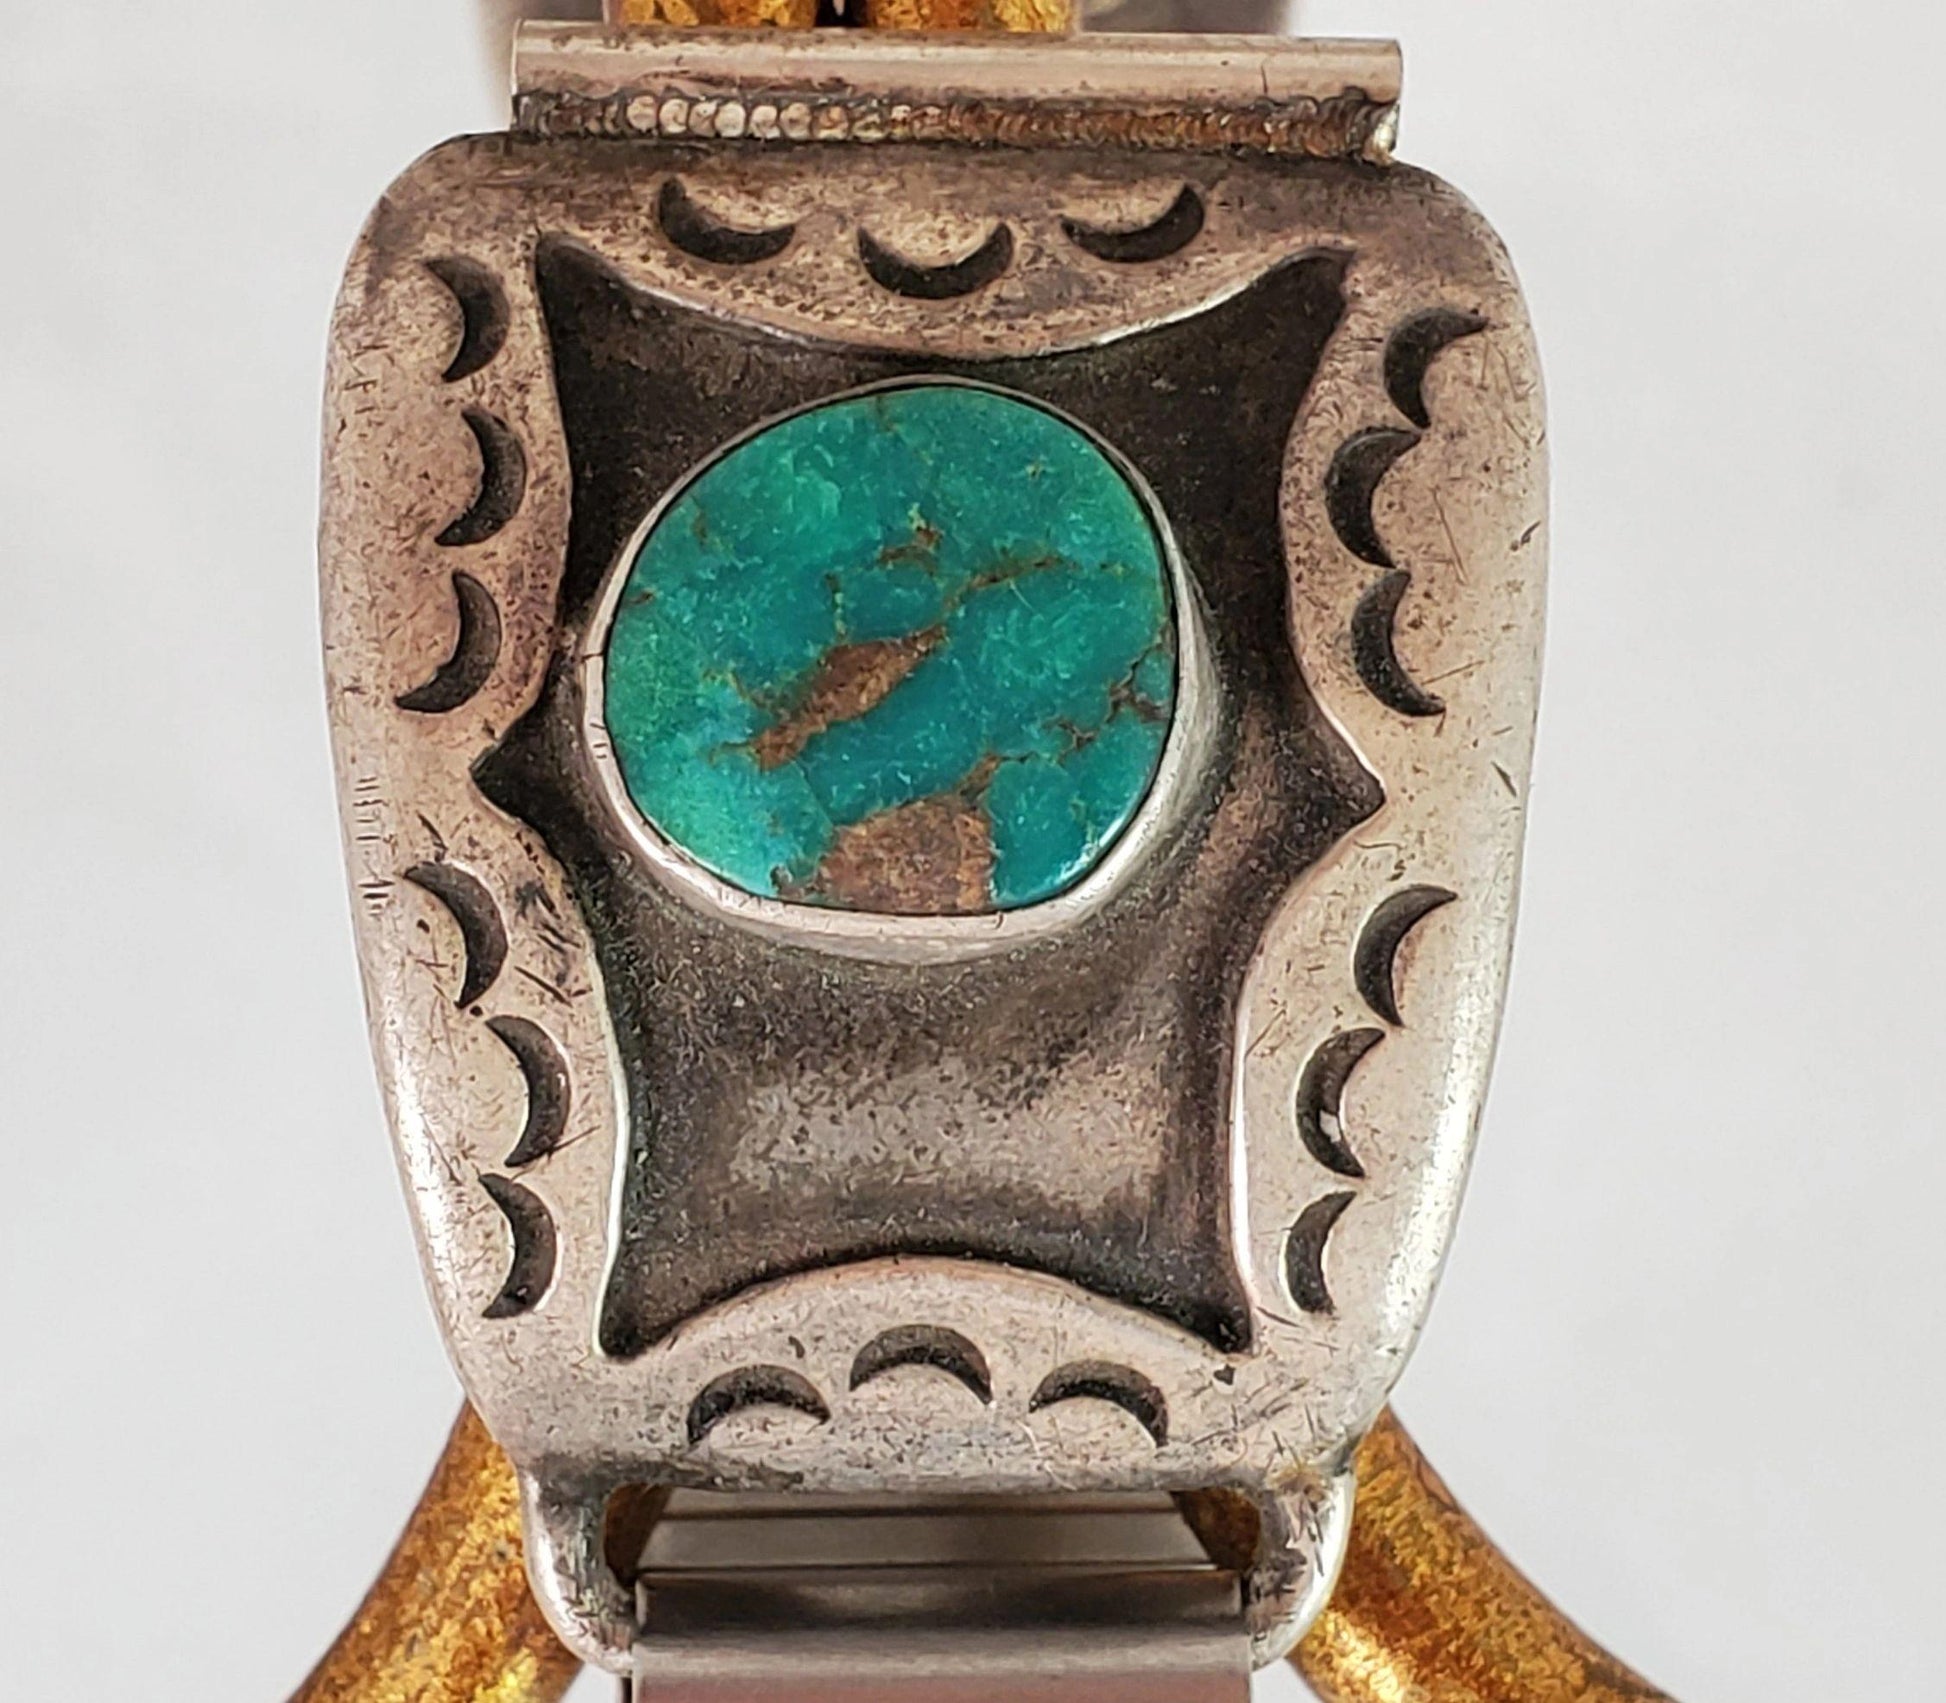 Vintage watch tips turquoise - Albuquerque Pawn Shop